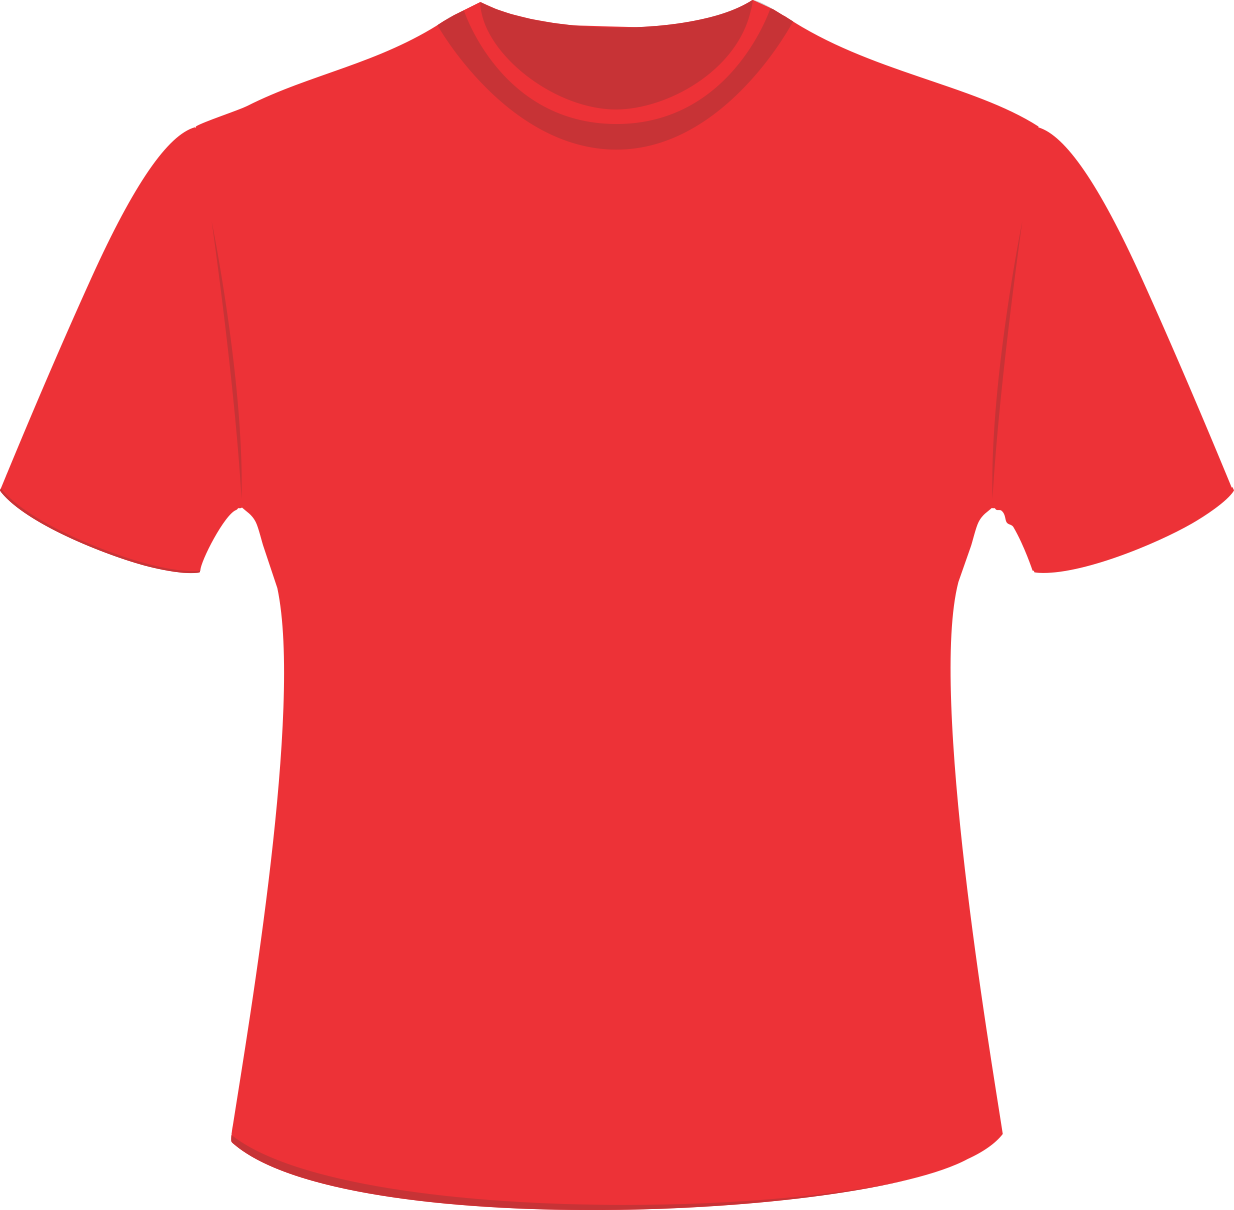 Mockup Camiseta Vermelha Editável